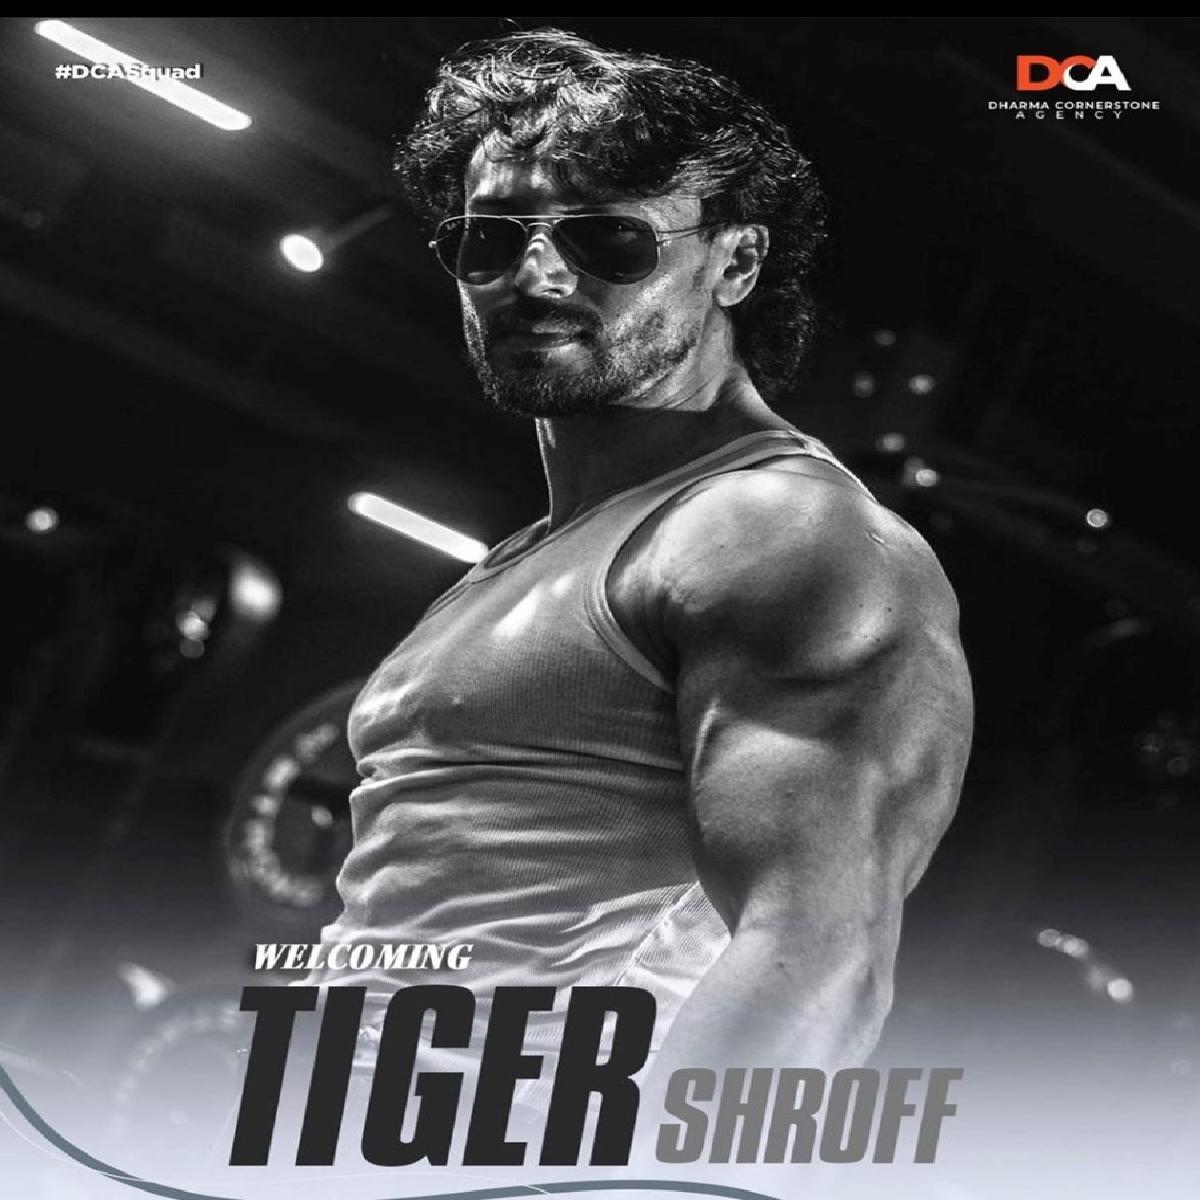 Karan Johar Welcomes Tiger Shroff On-Board DCA